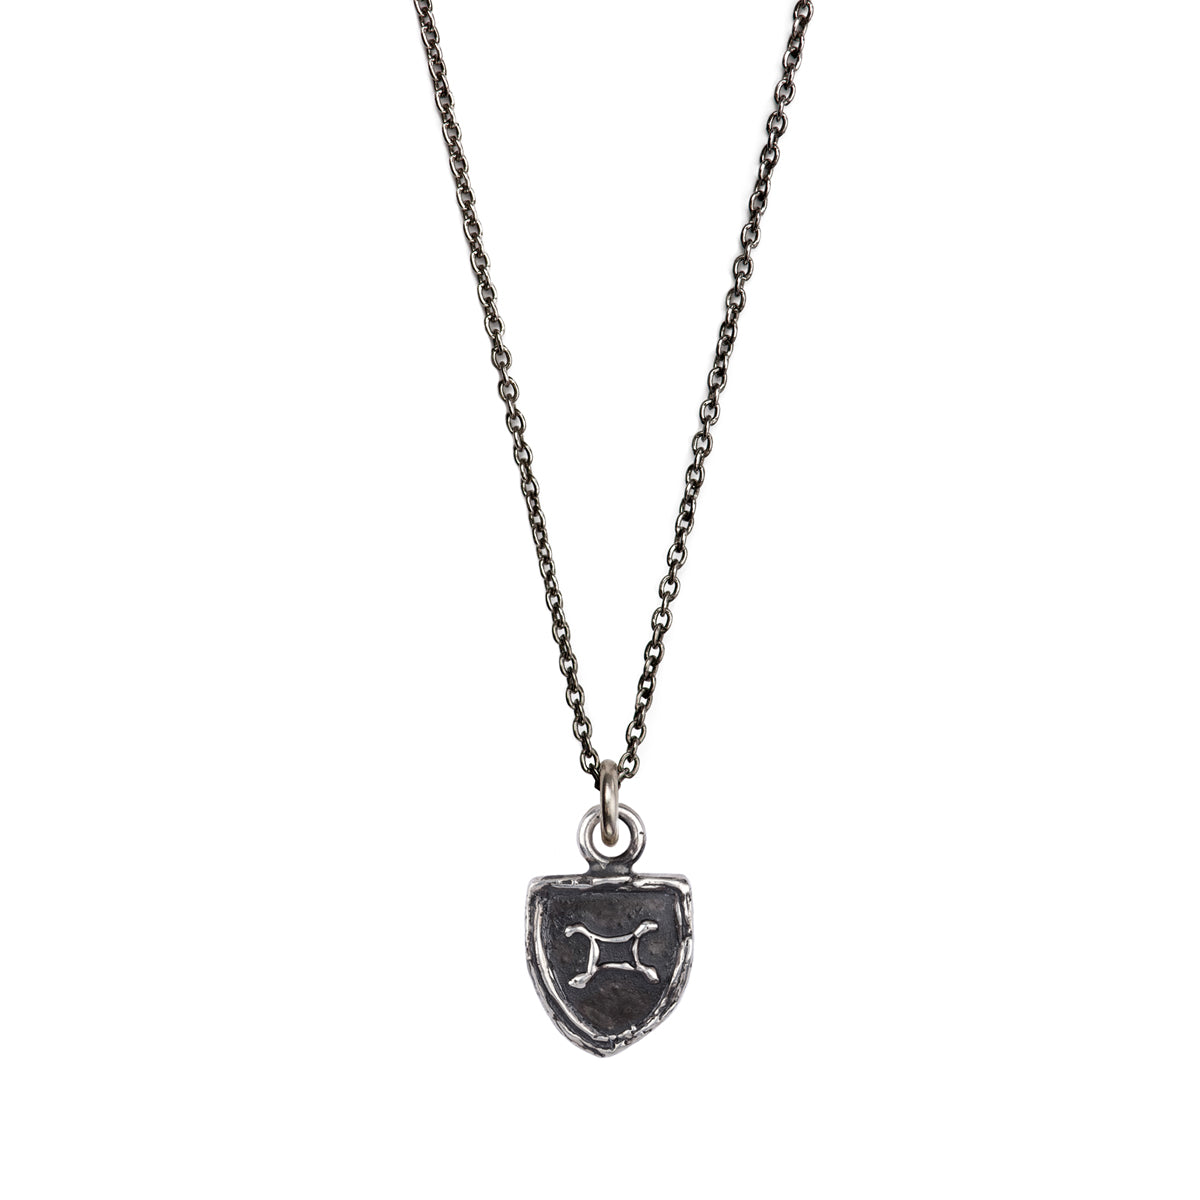 A sterling silver Gemini zodiac charm on a silver chain.